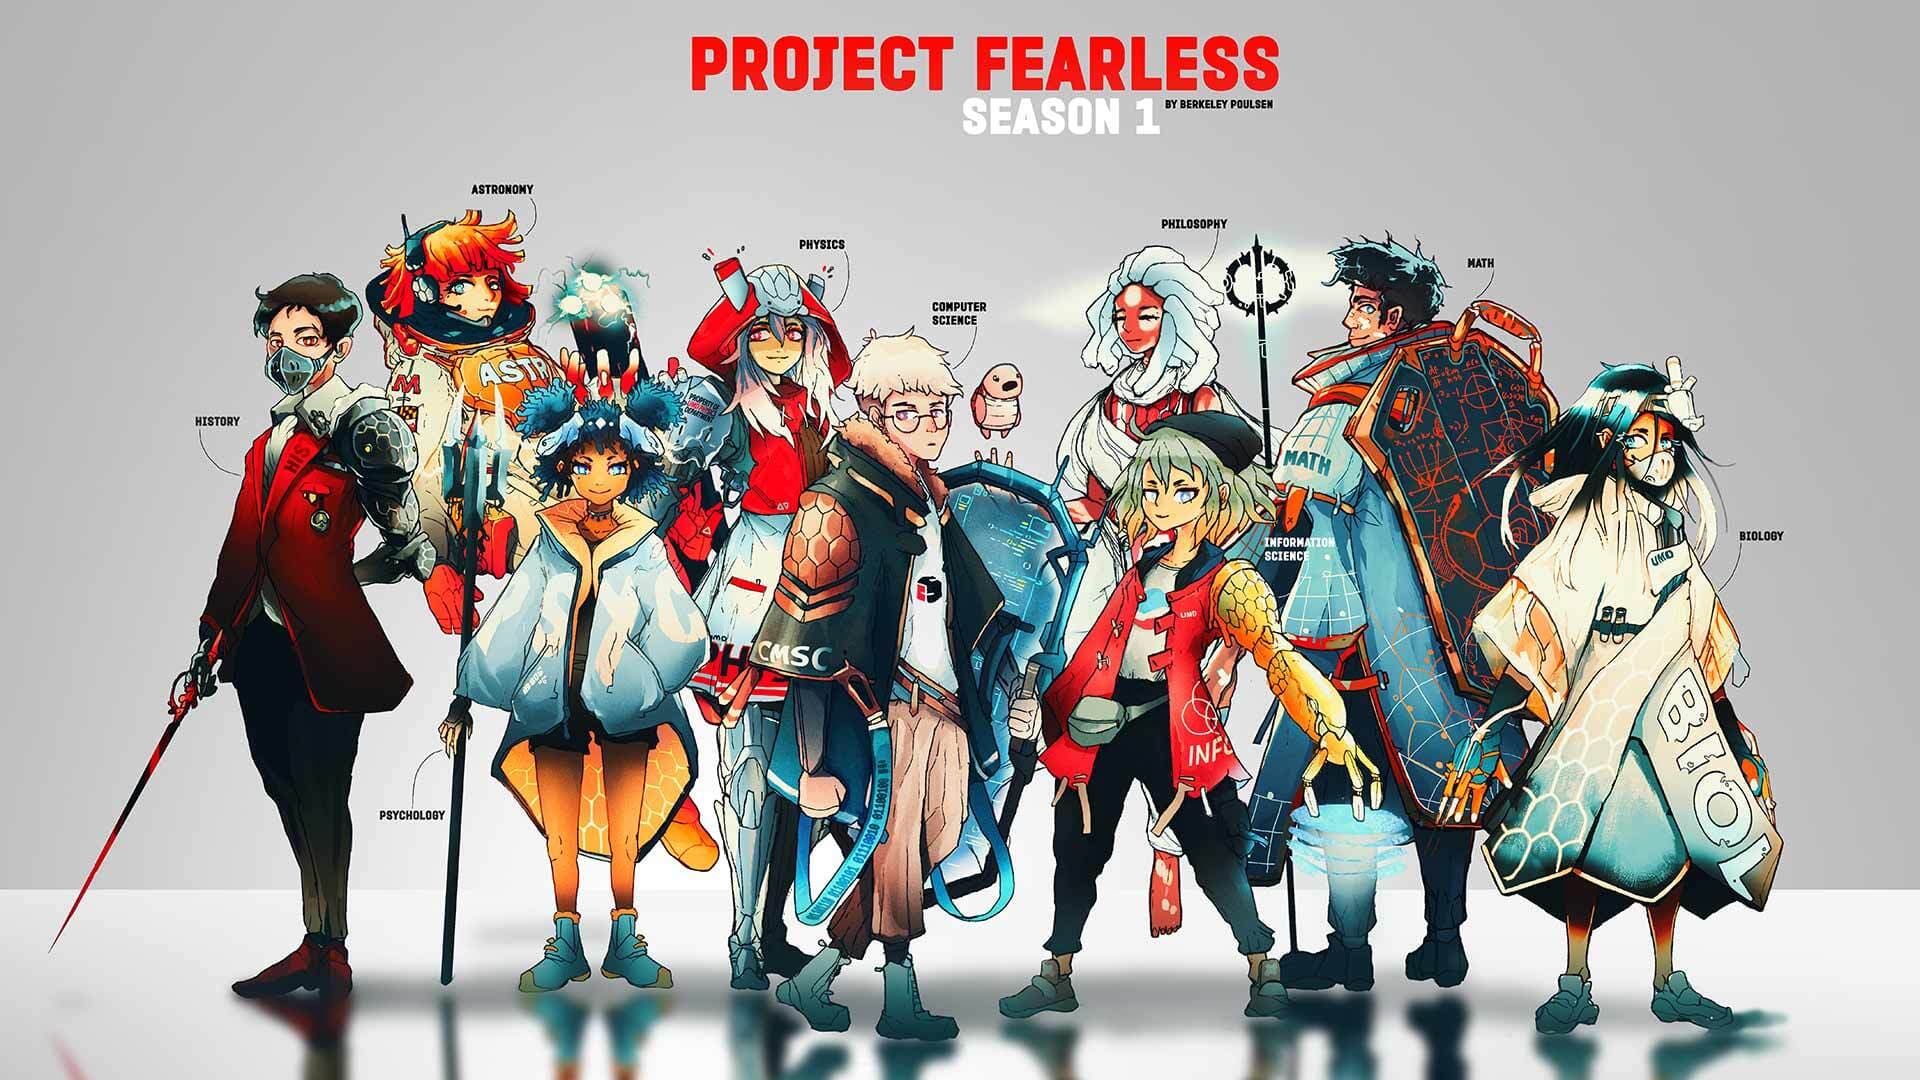 Project Fearless Season 1, by Berkeley Poulsen: Drawings of characters representing UMD majors